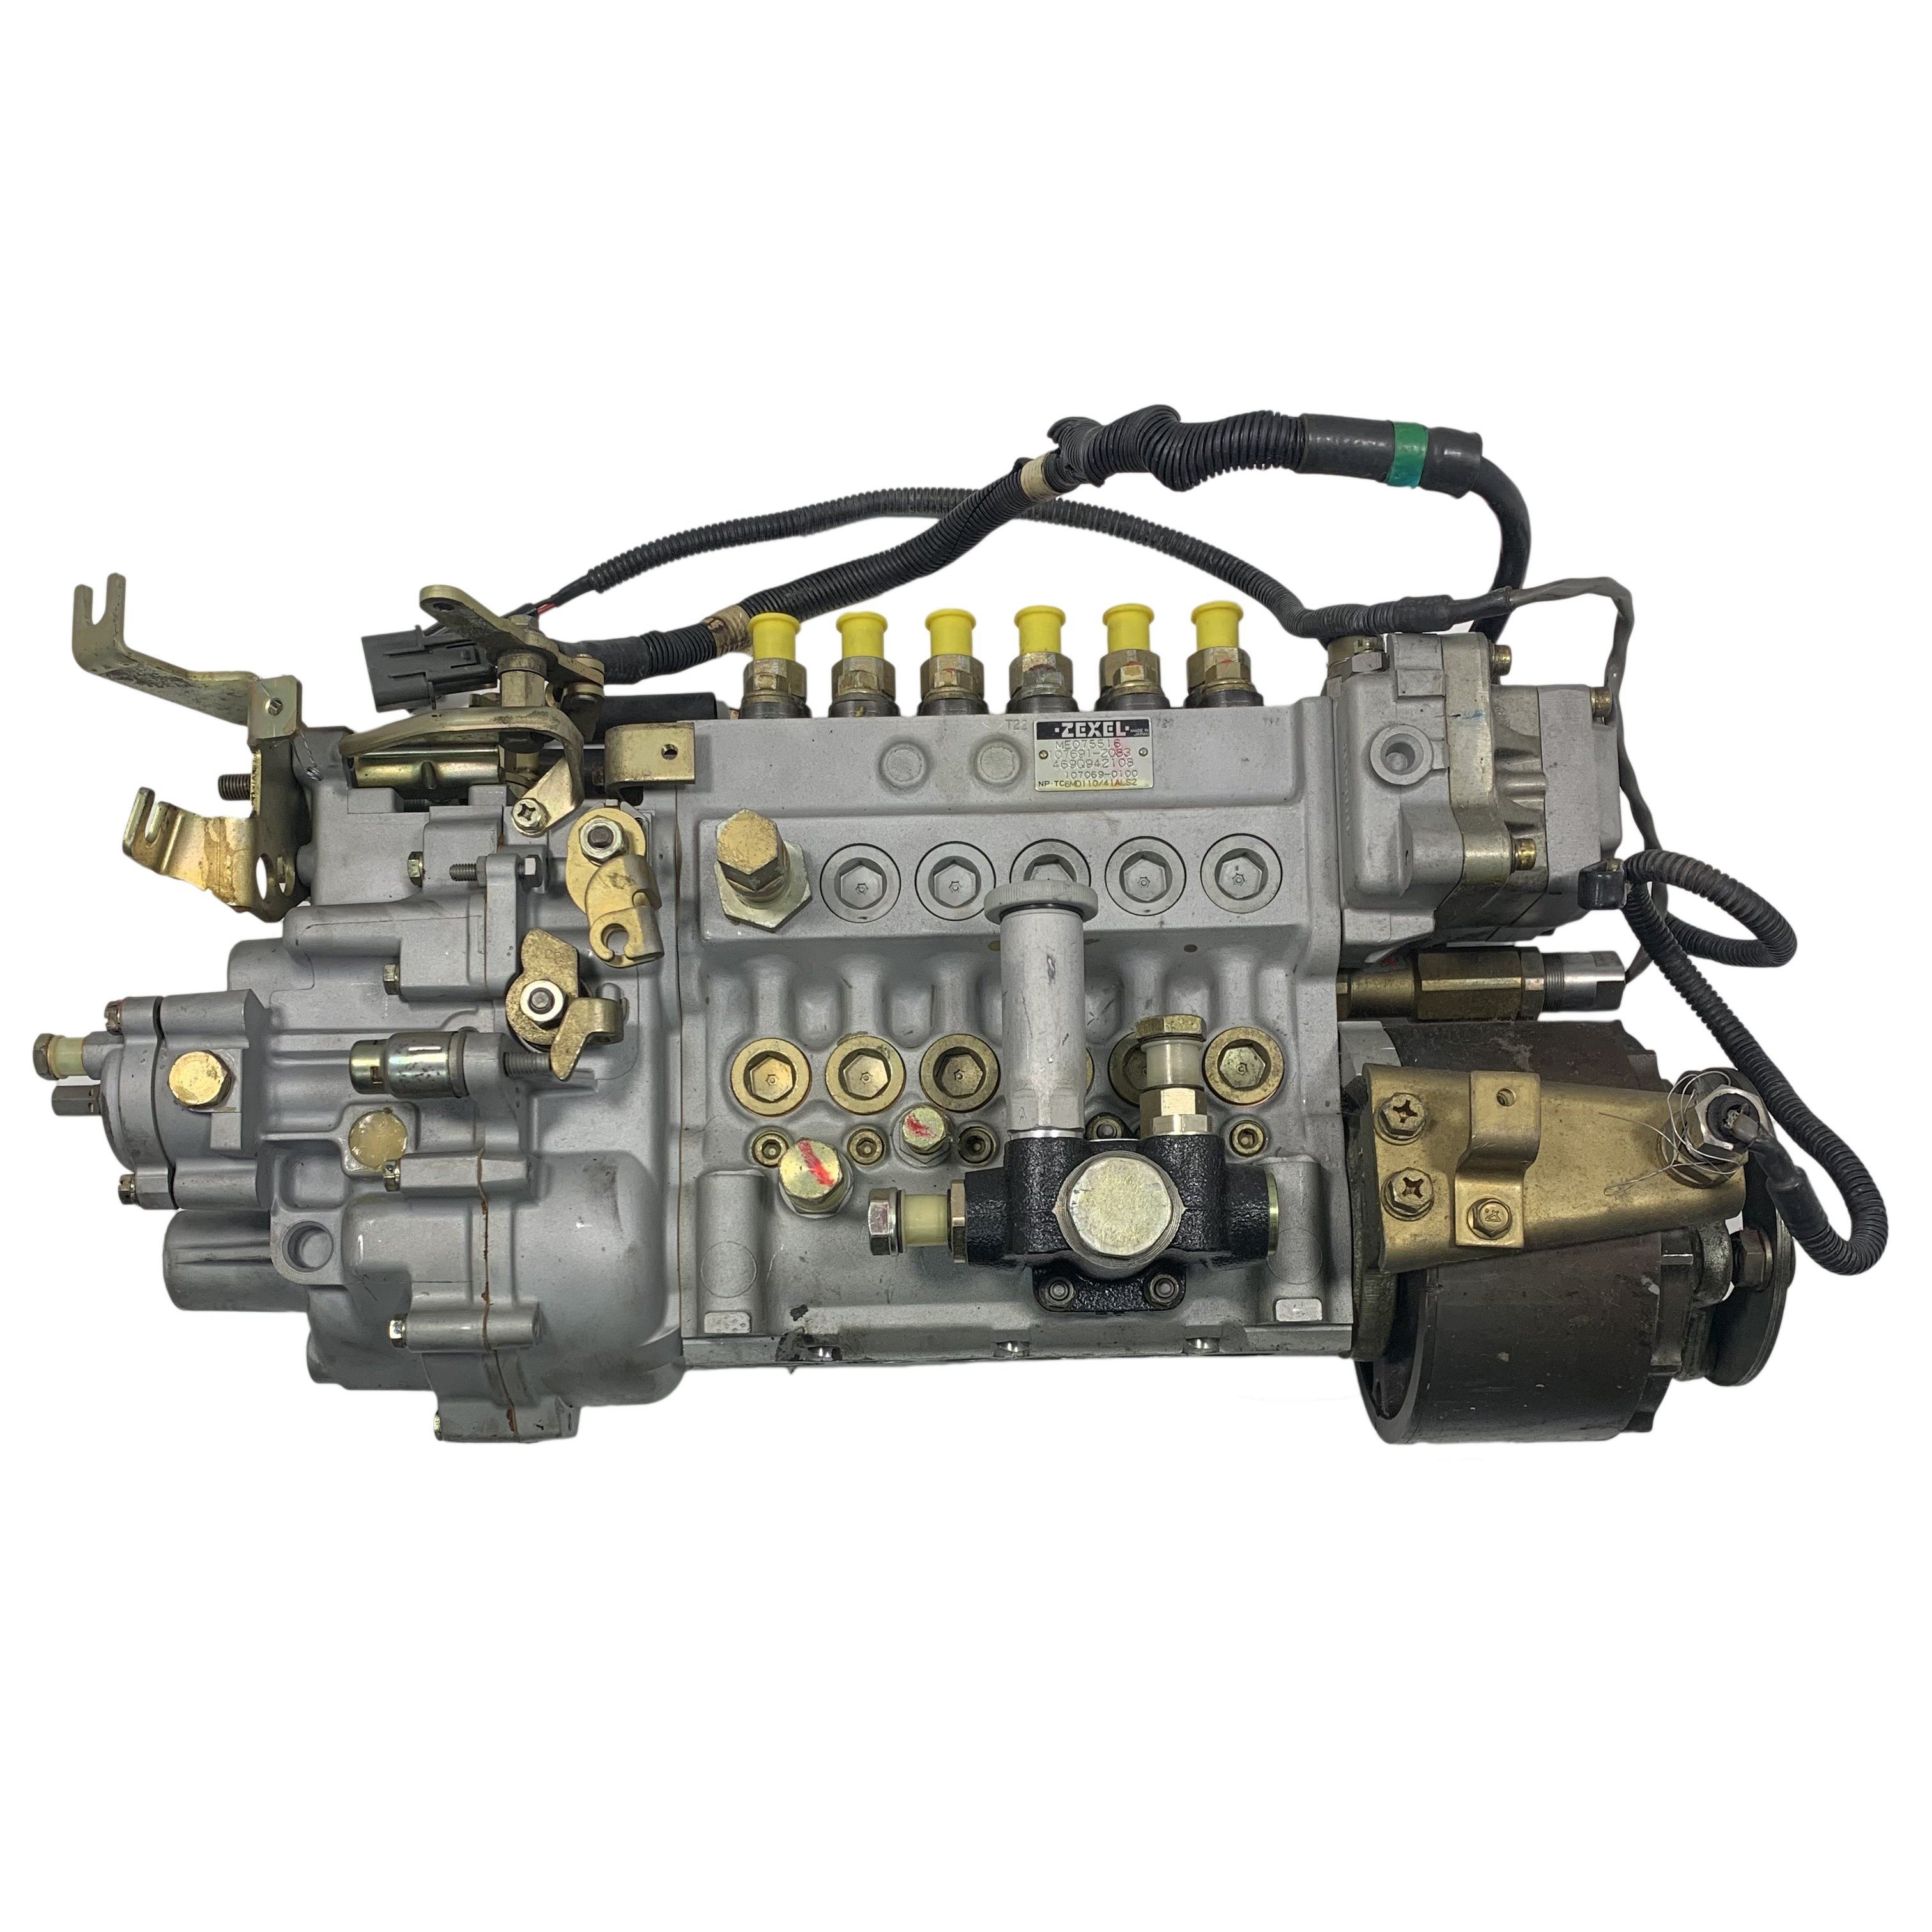 107069-0100R (9-411-612-169) Rebuilt Zexel Fuel Injection Pump Fits Bosch  Mitsubishi ME738543 Diesel Engine